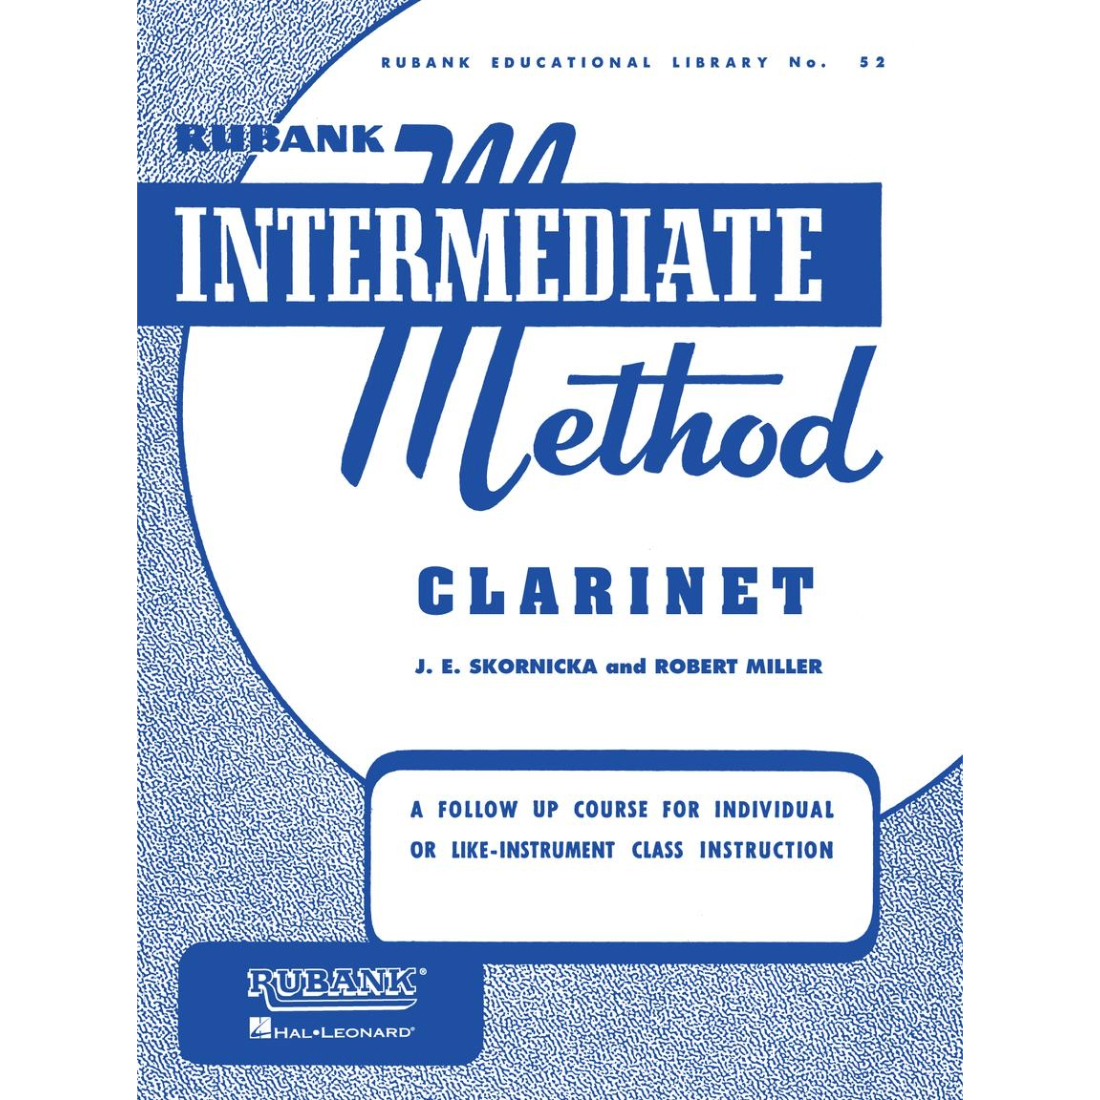 Blue and White Intermediate Method book